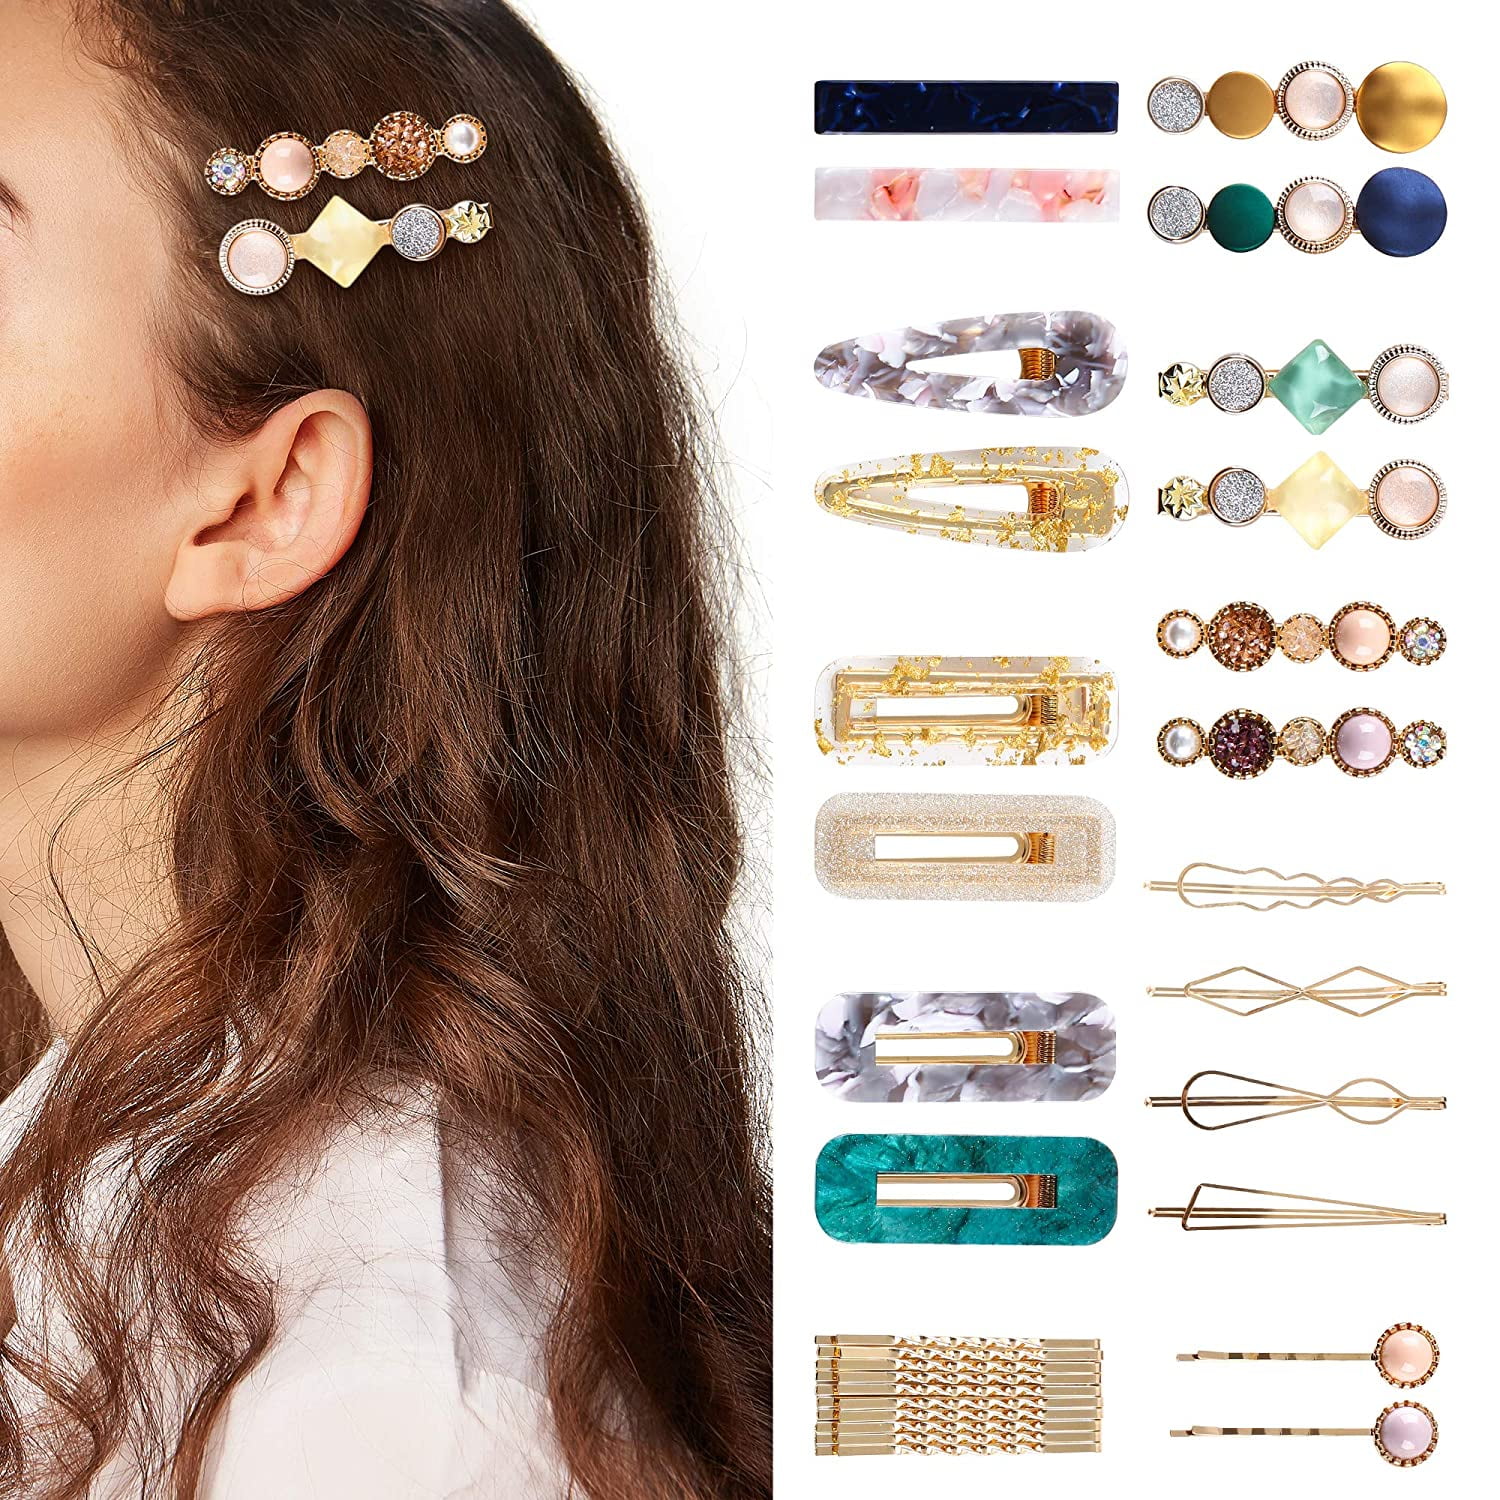 Lady Girl's Snap Pearl Hair Clips Slide Pins Grip Barrette Hair Pin Accessories 